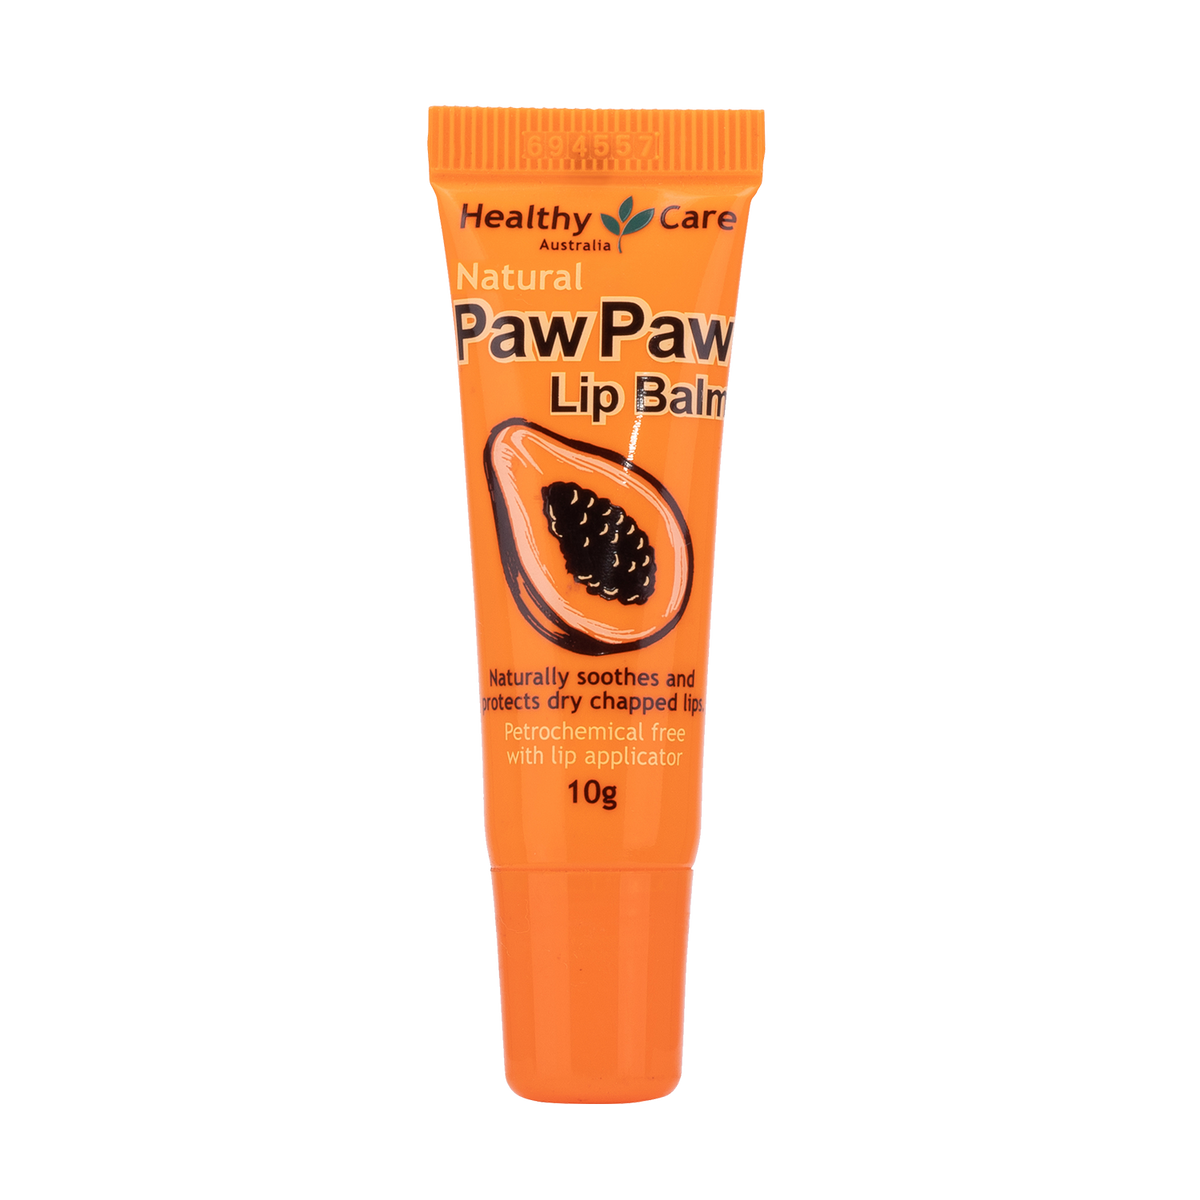 Paw Paw Lip Balm 10g-Skin Care Masks & Peels-Healthy Care Australia